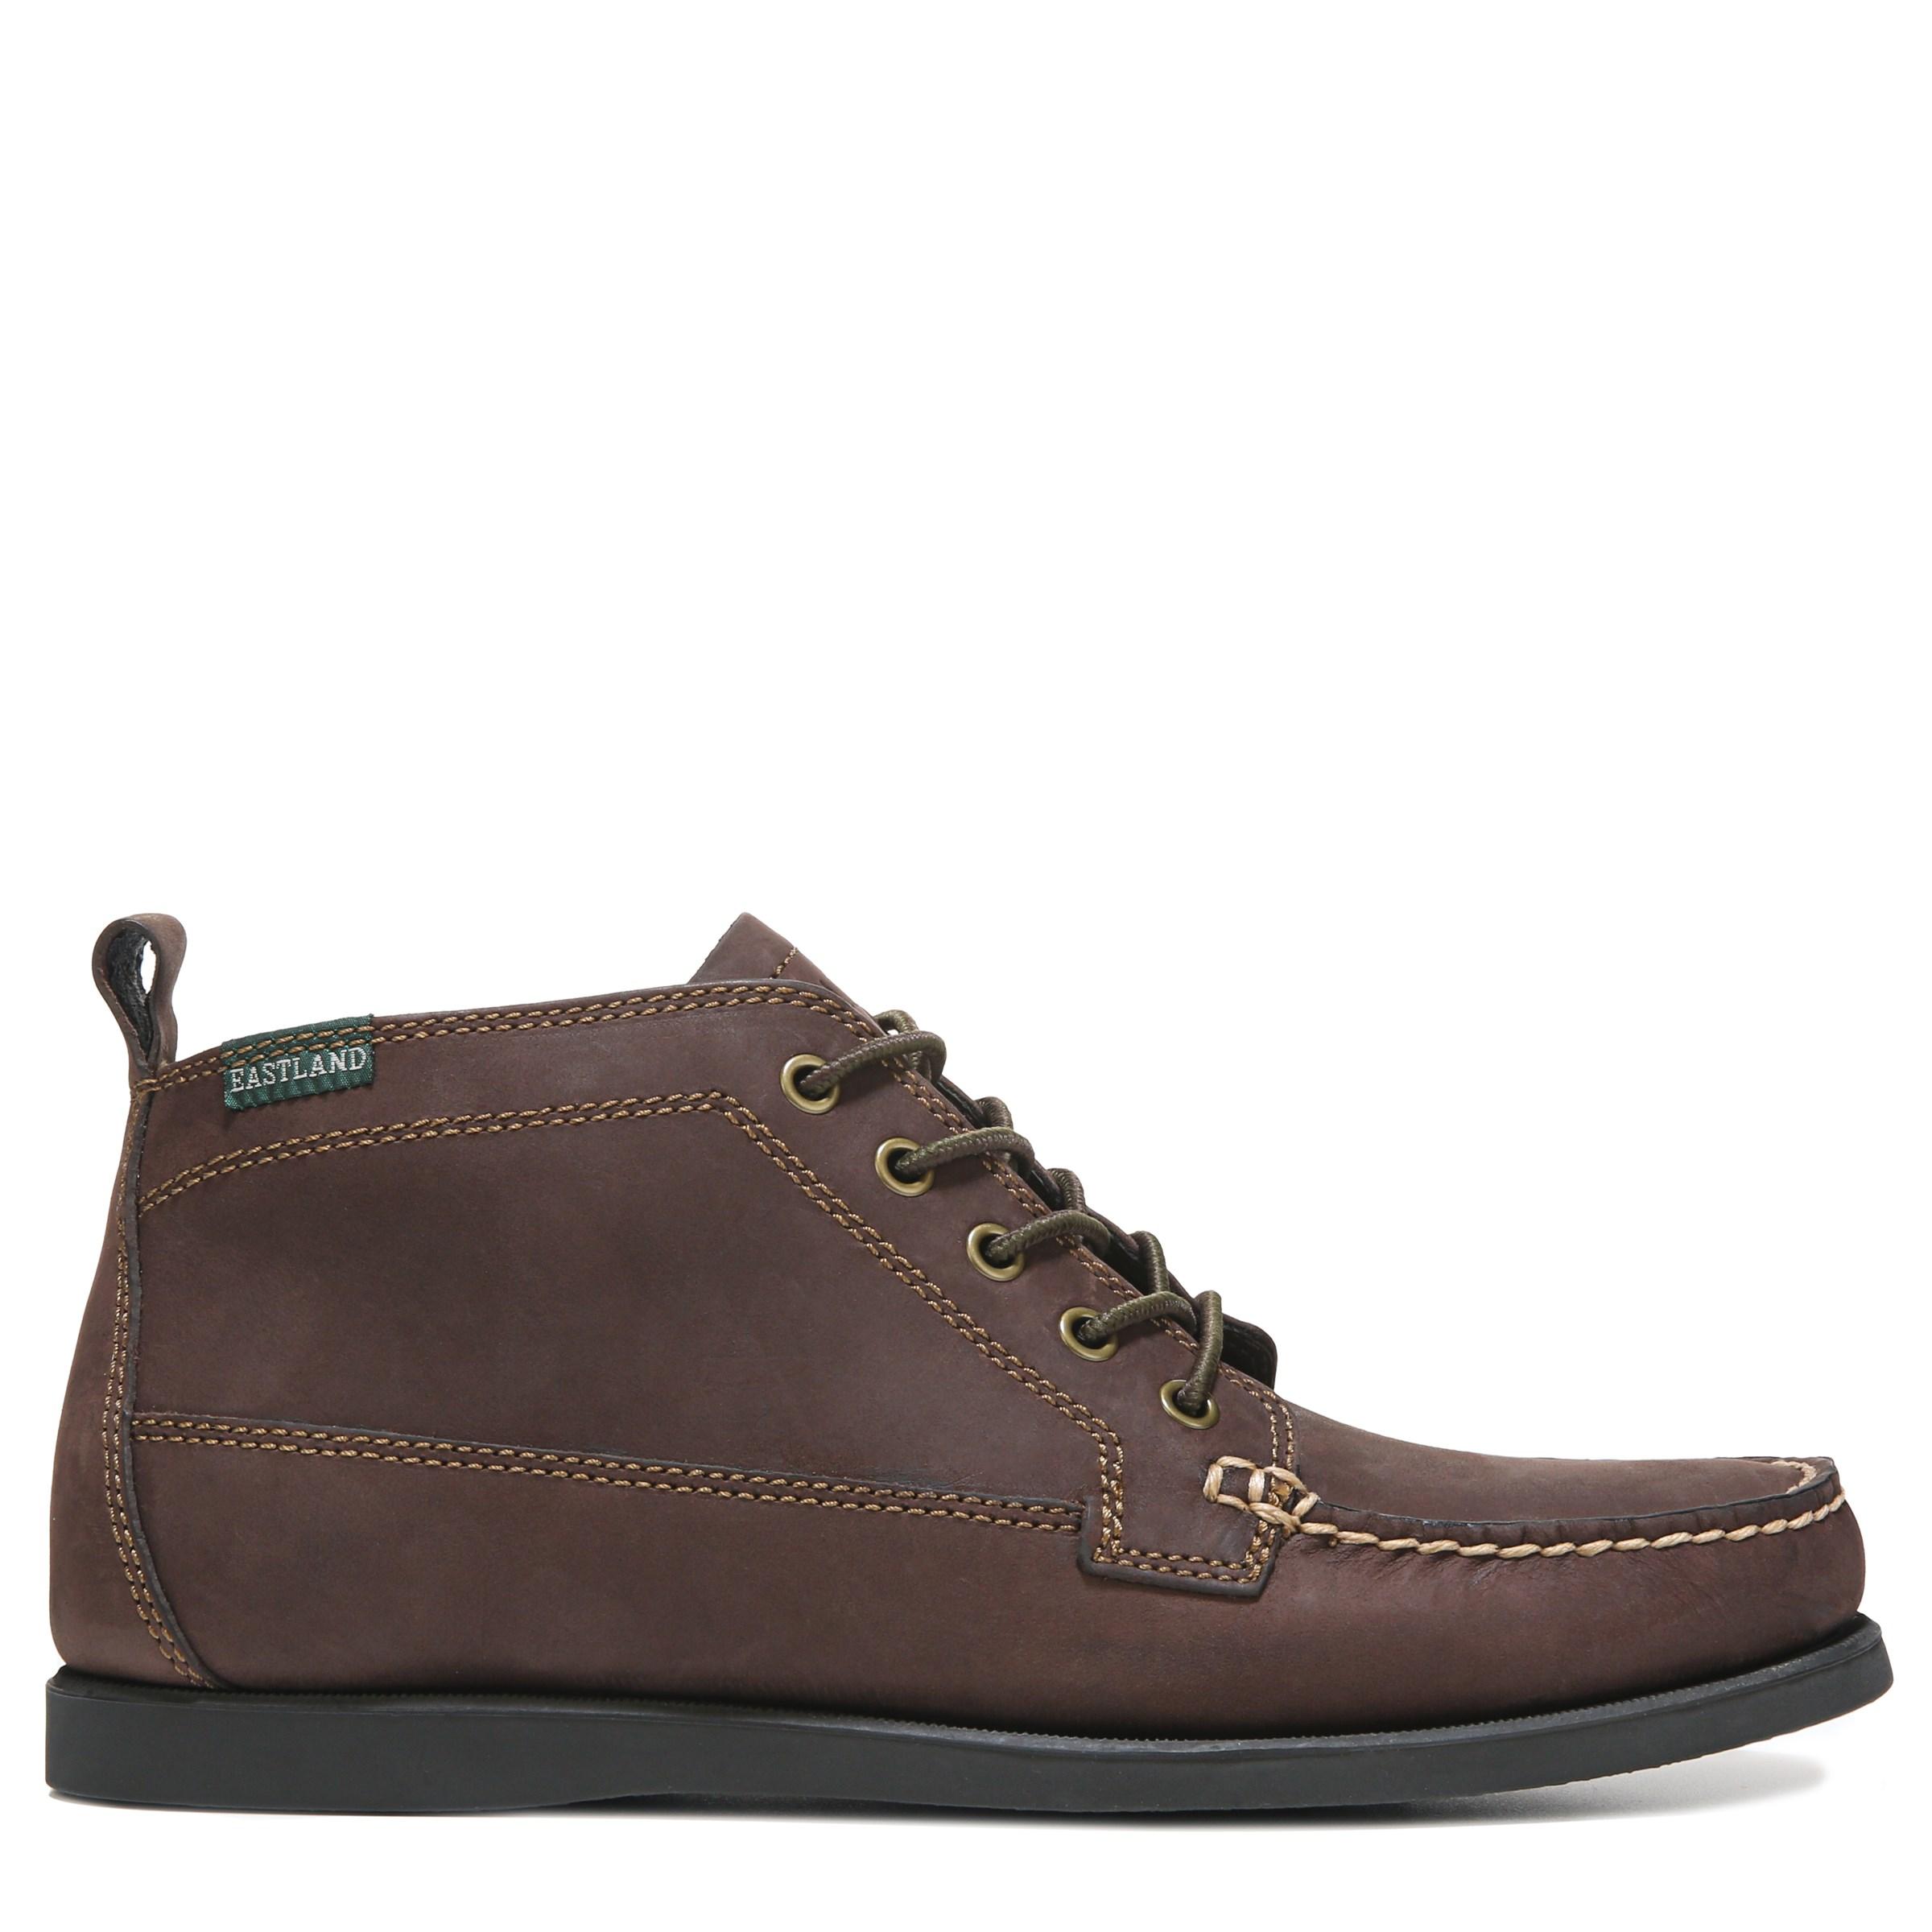 Eastland Seneca Moc Toe Ankle Boots in Brown for Men - Lyst